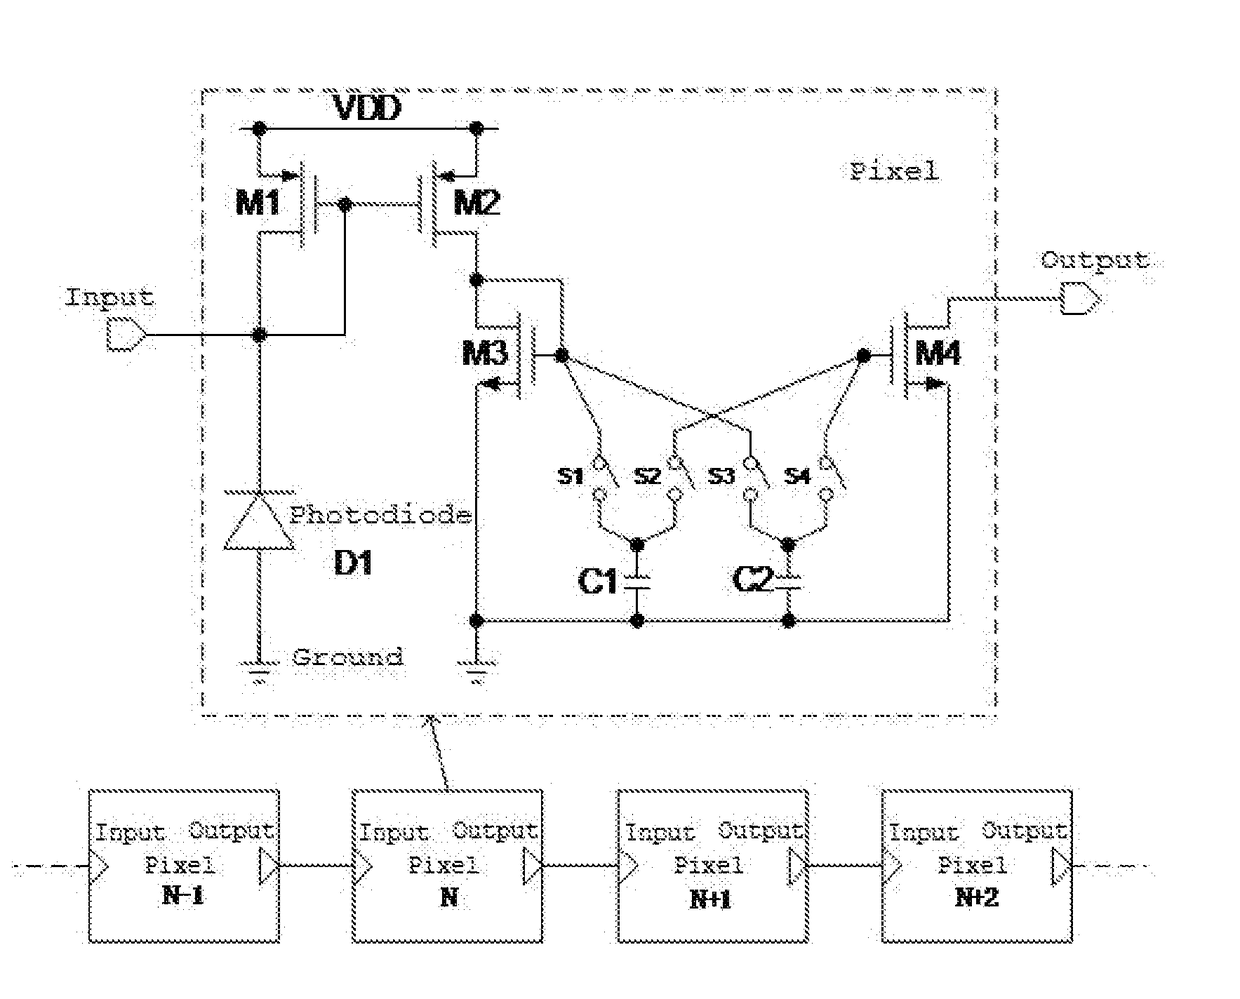 Current Accumulative Pixel Structure for CMOS-TDI image sensor